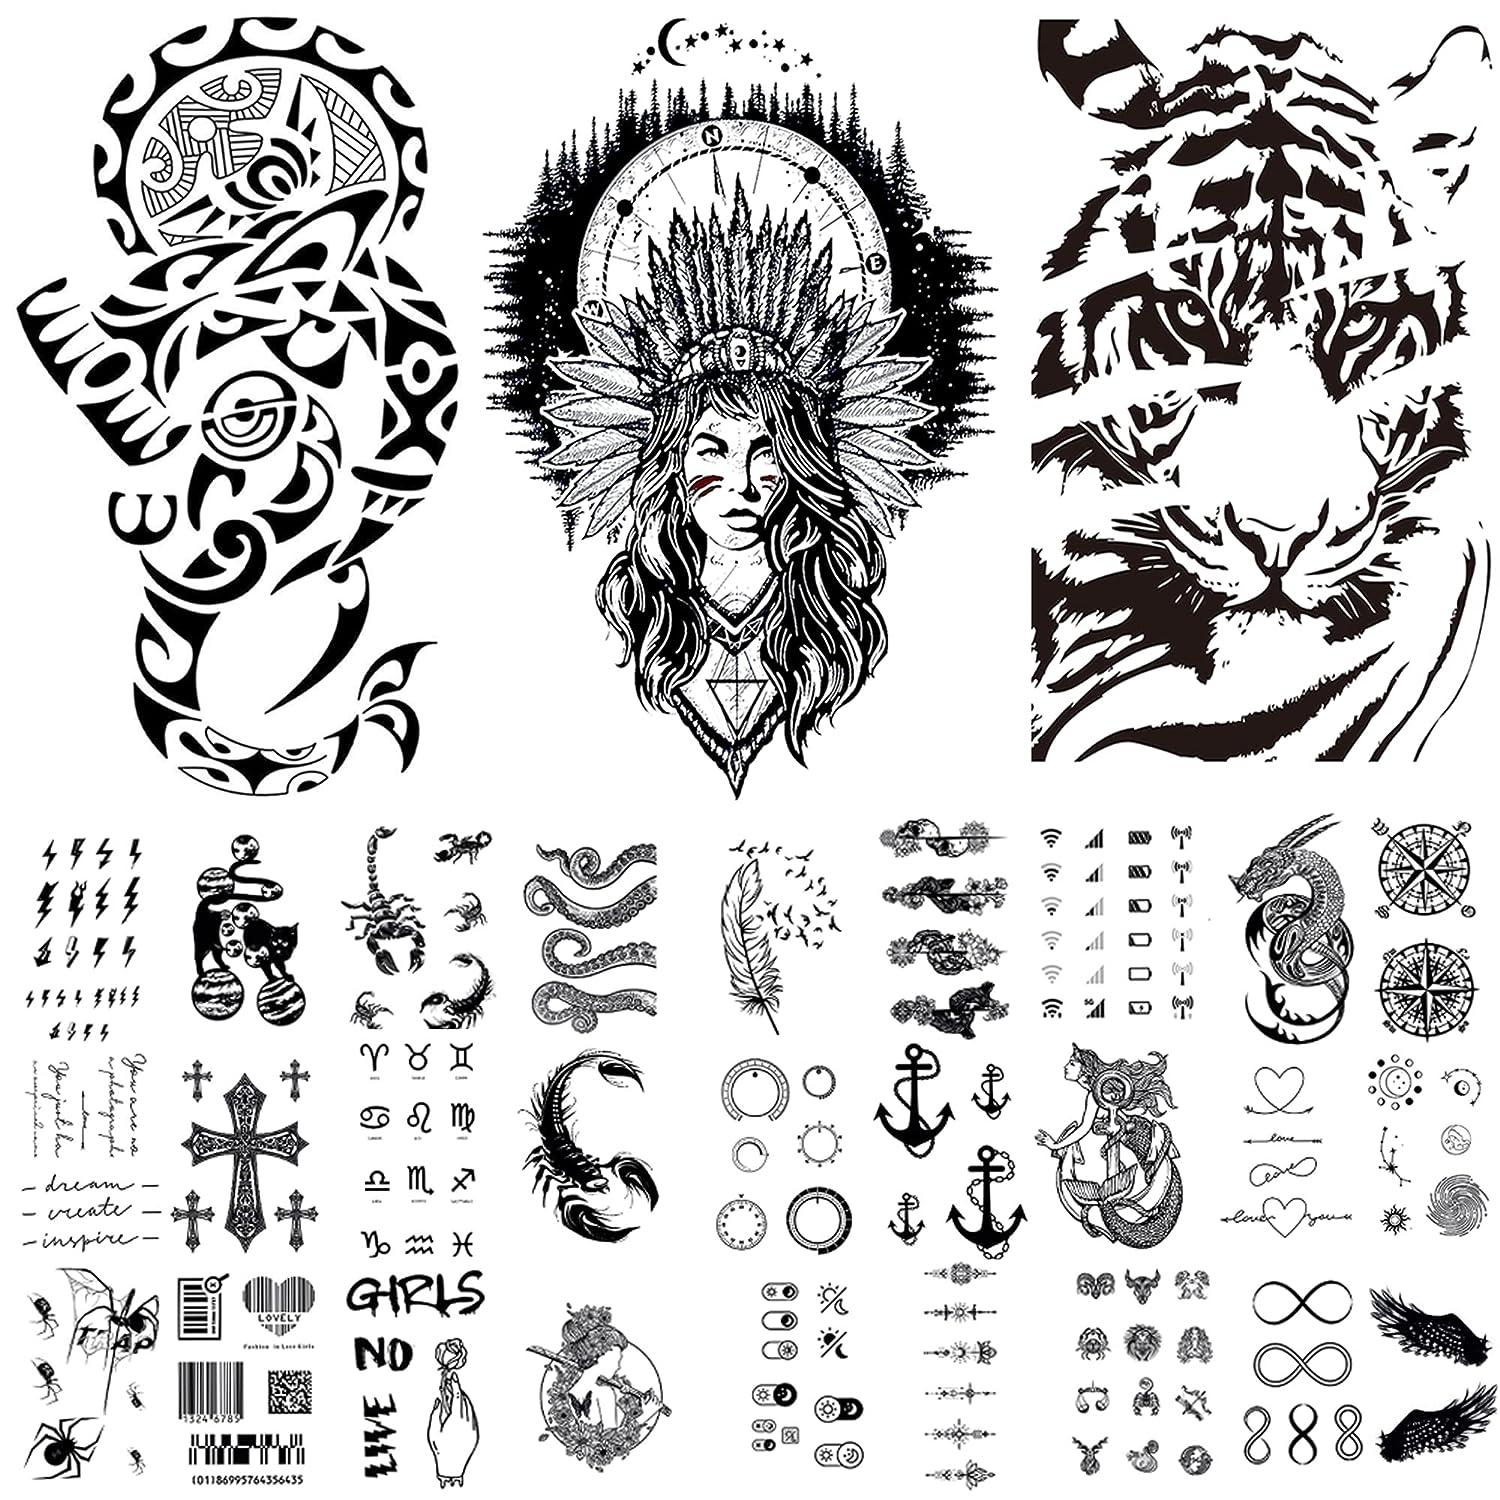 Tattoo Designs - Business Development Manager - Tattooart | LinkedIn